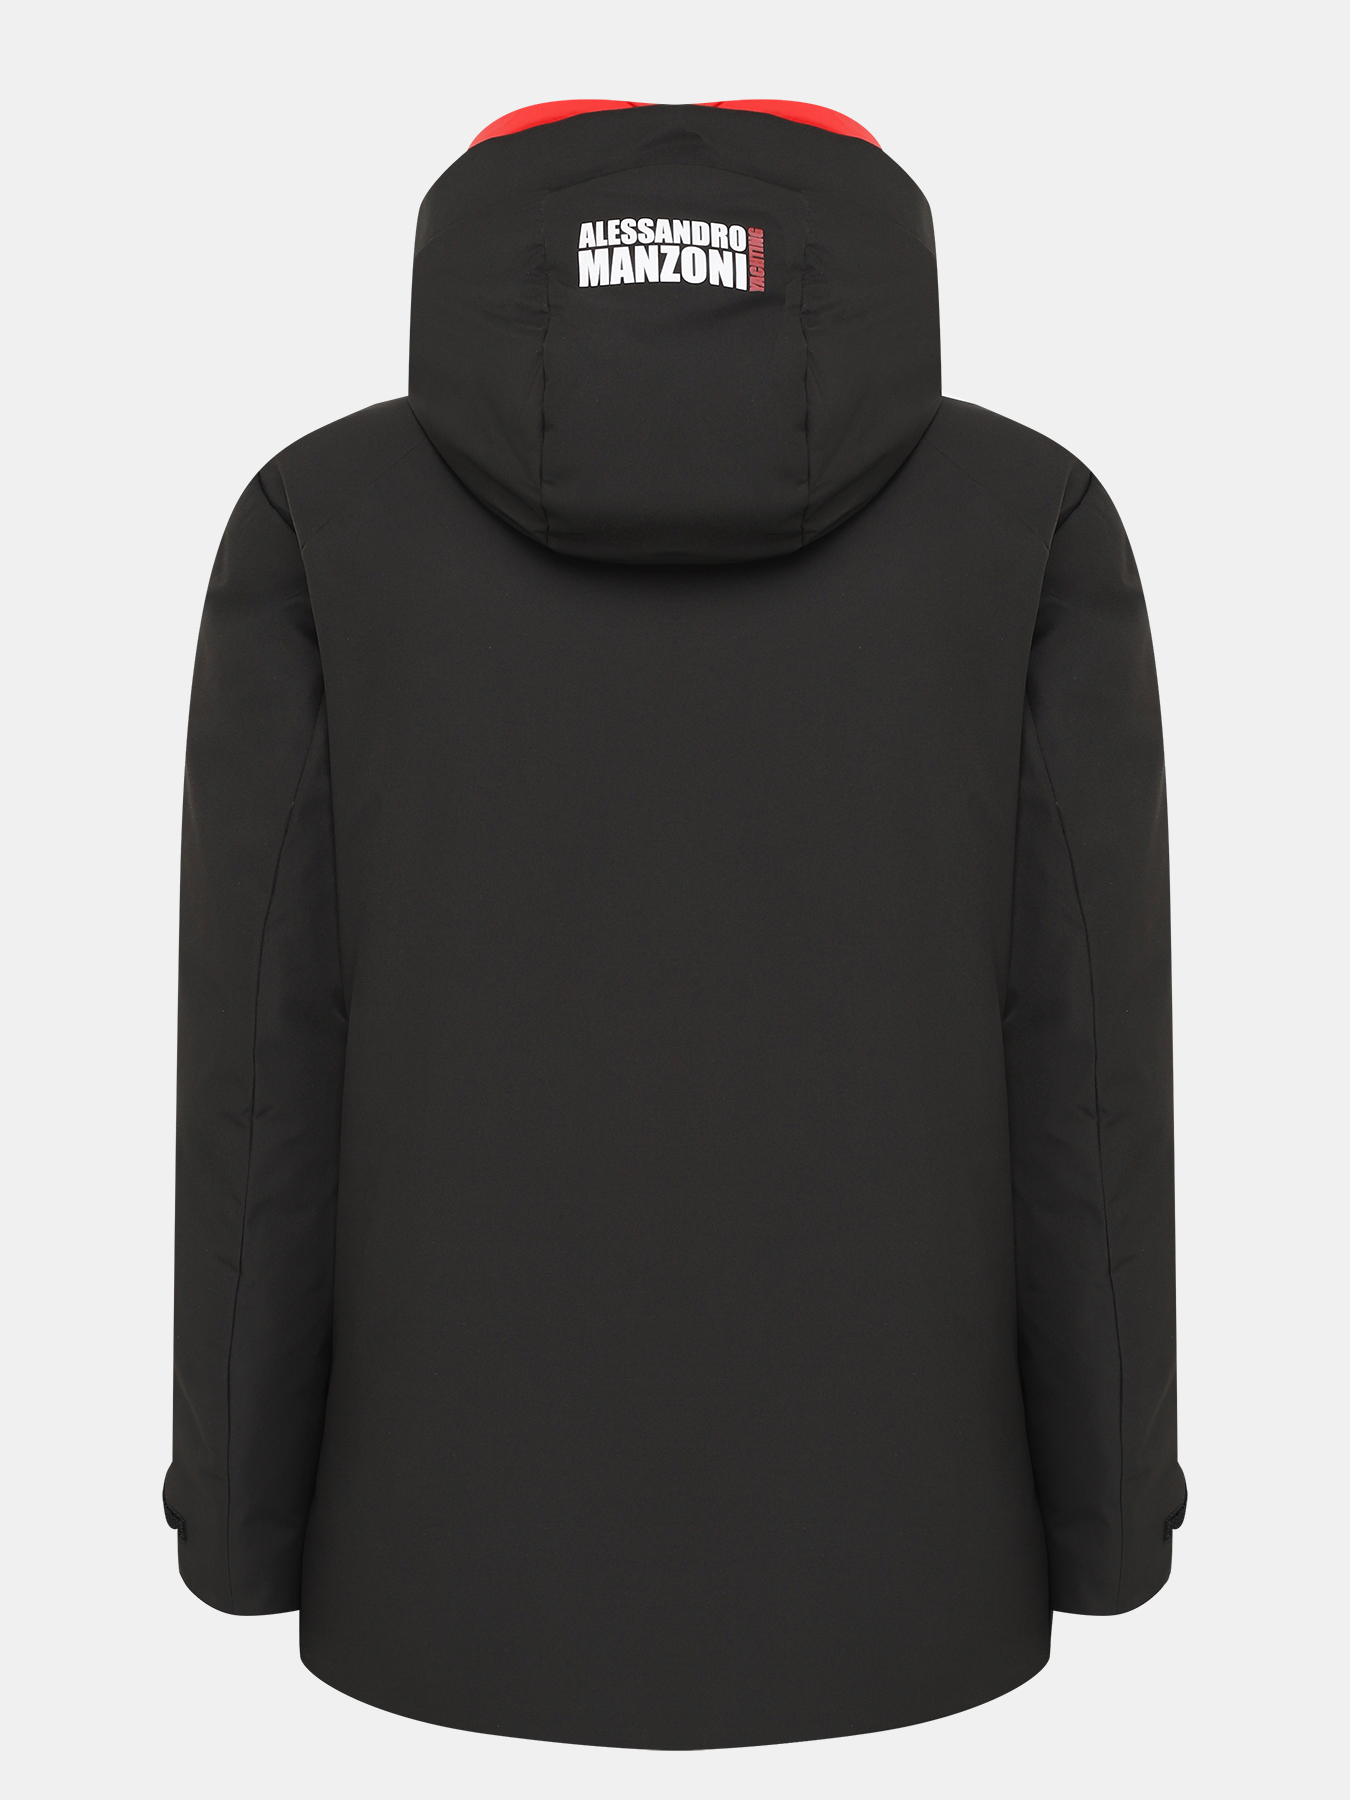 Зимняя куртка Alessandro Manzoni Yachting 382195-026, цвет черный, размер 50 - фото 6